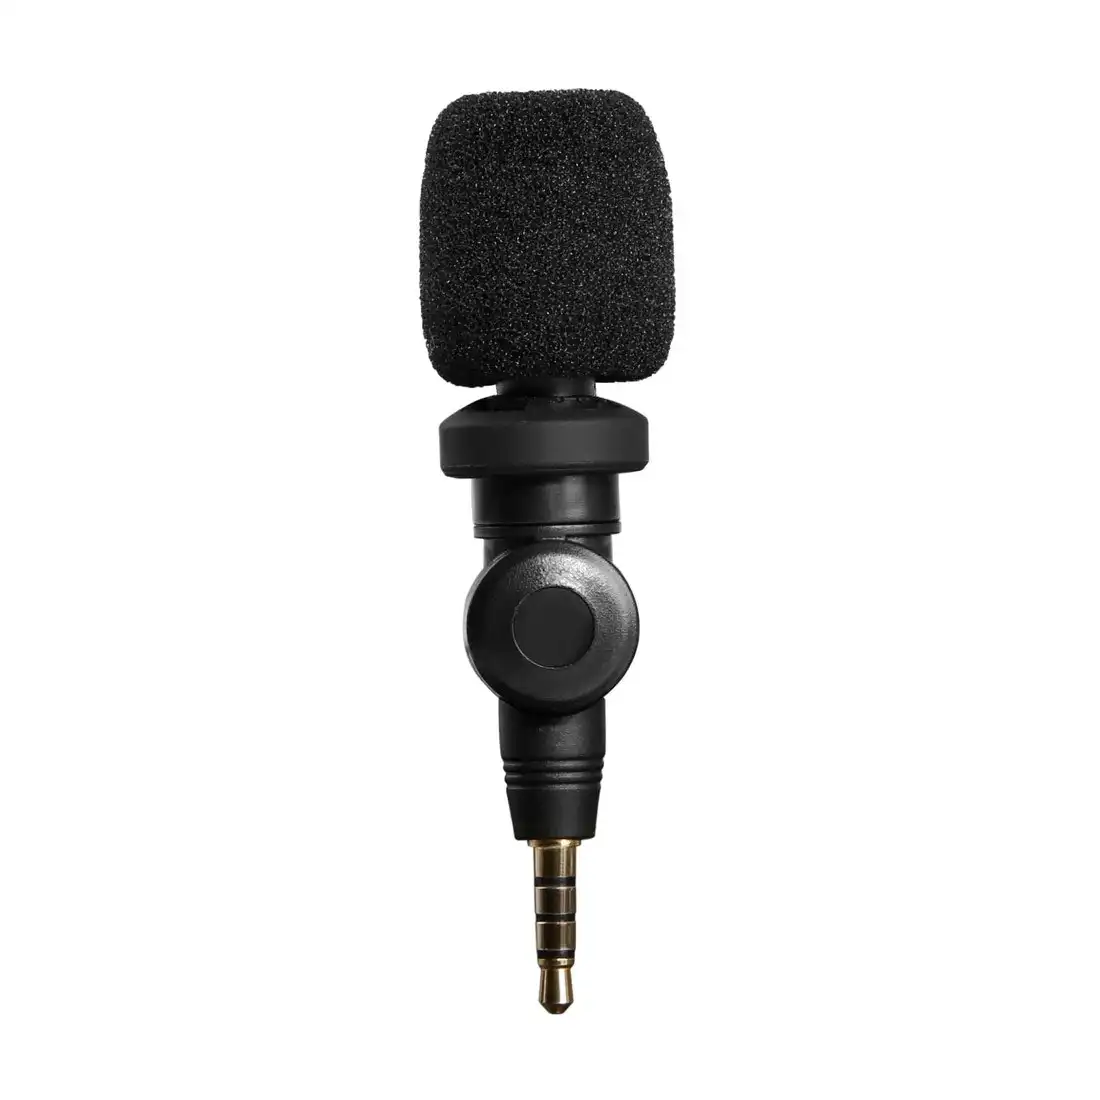 Saramonic SmartMic Ultra Compact Microphone for 3.5mm jack